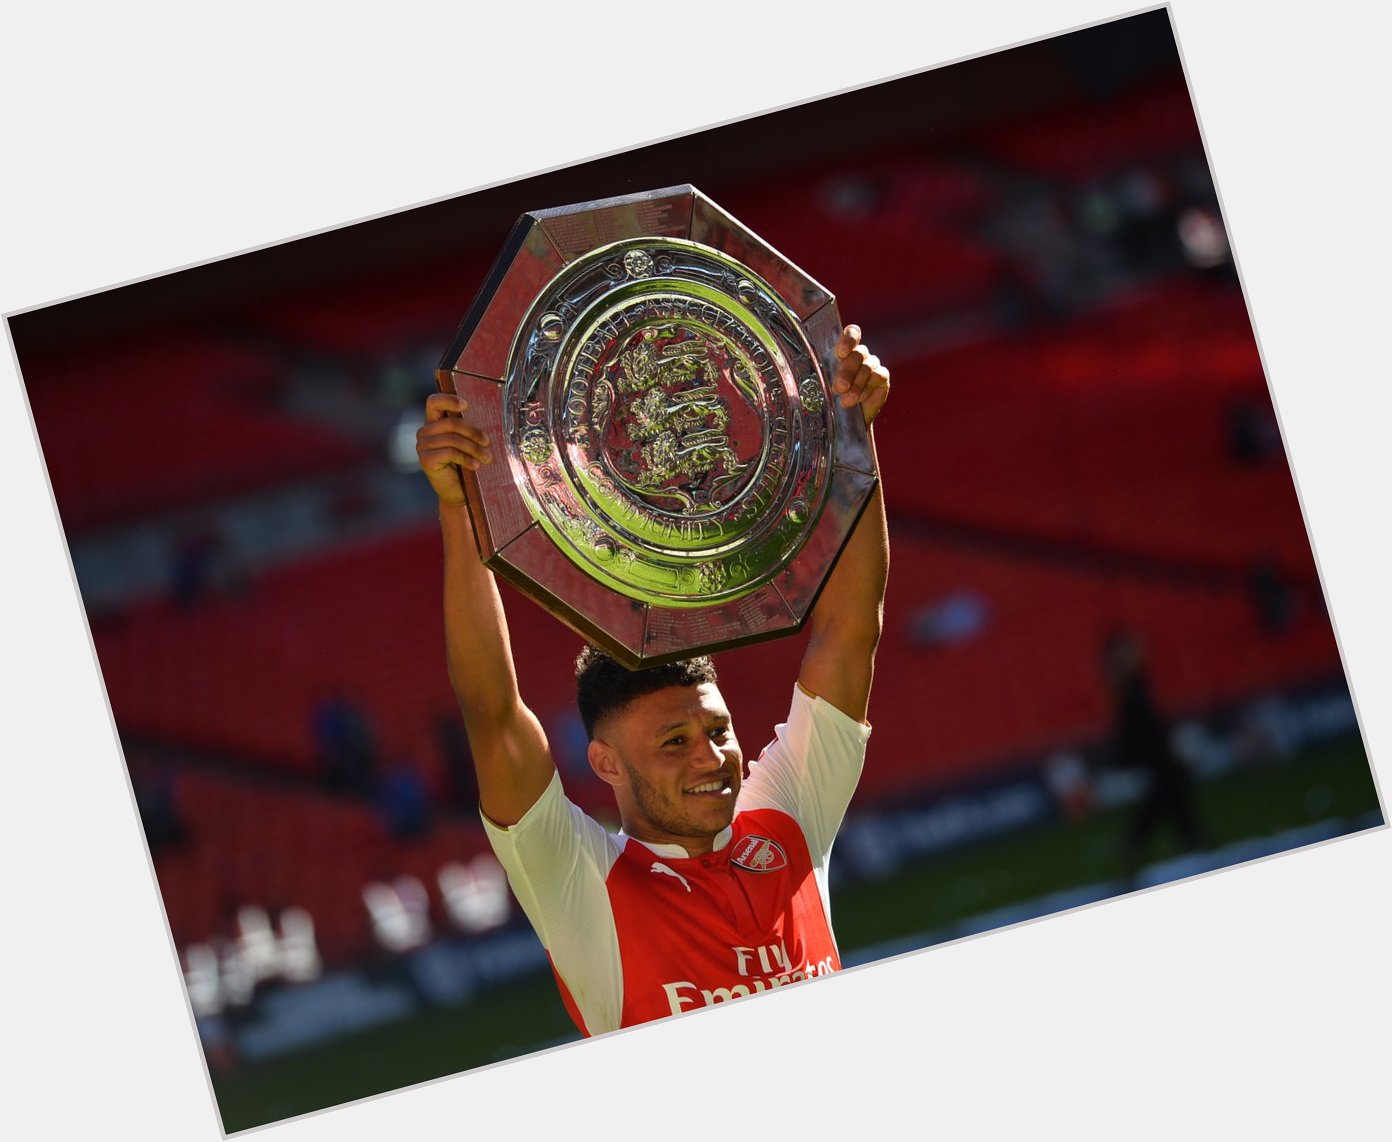 Happy birthday to Alex Oxlade-Chamberlain. The Arsenal midfielder turns 24 today. 